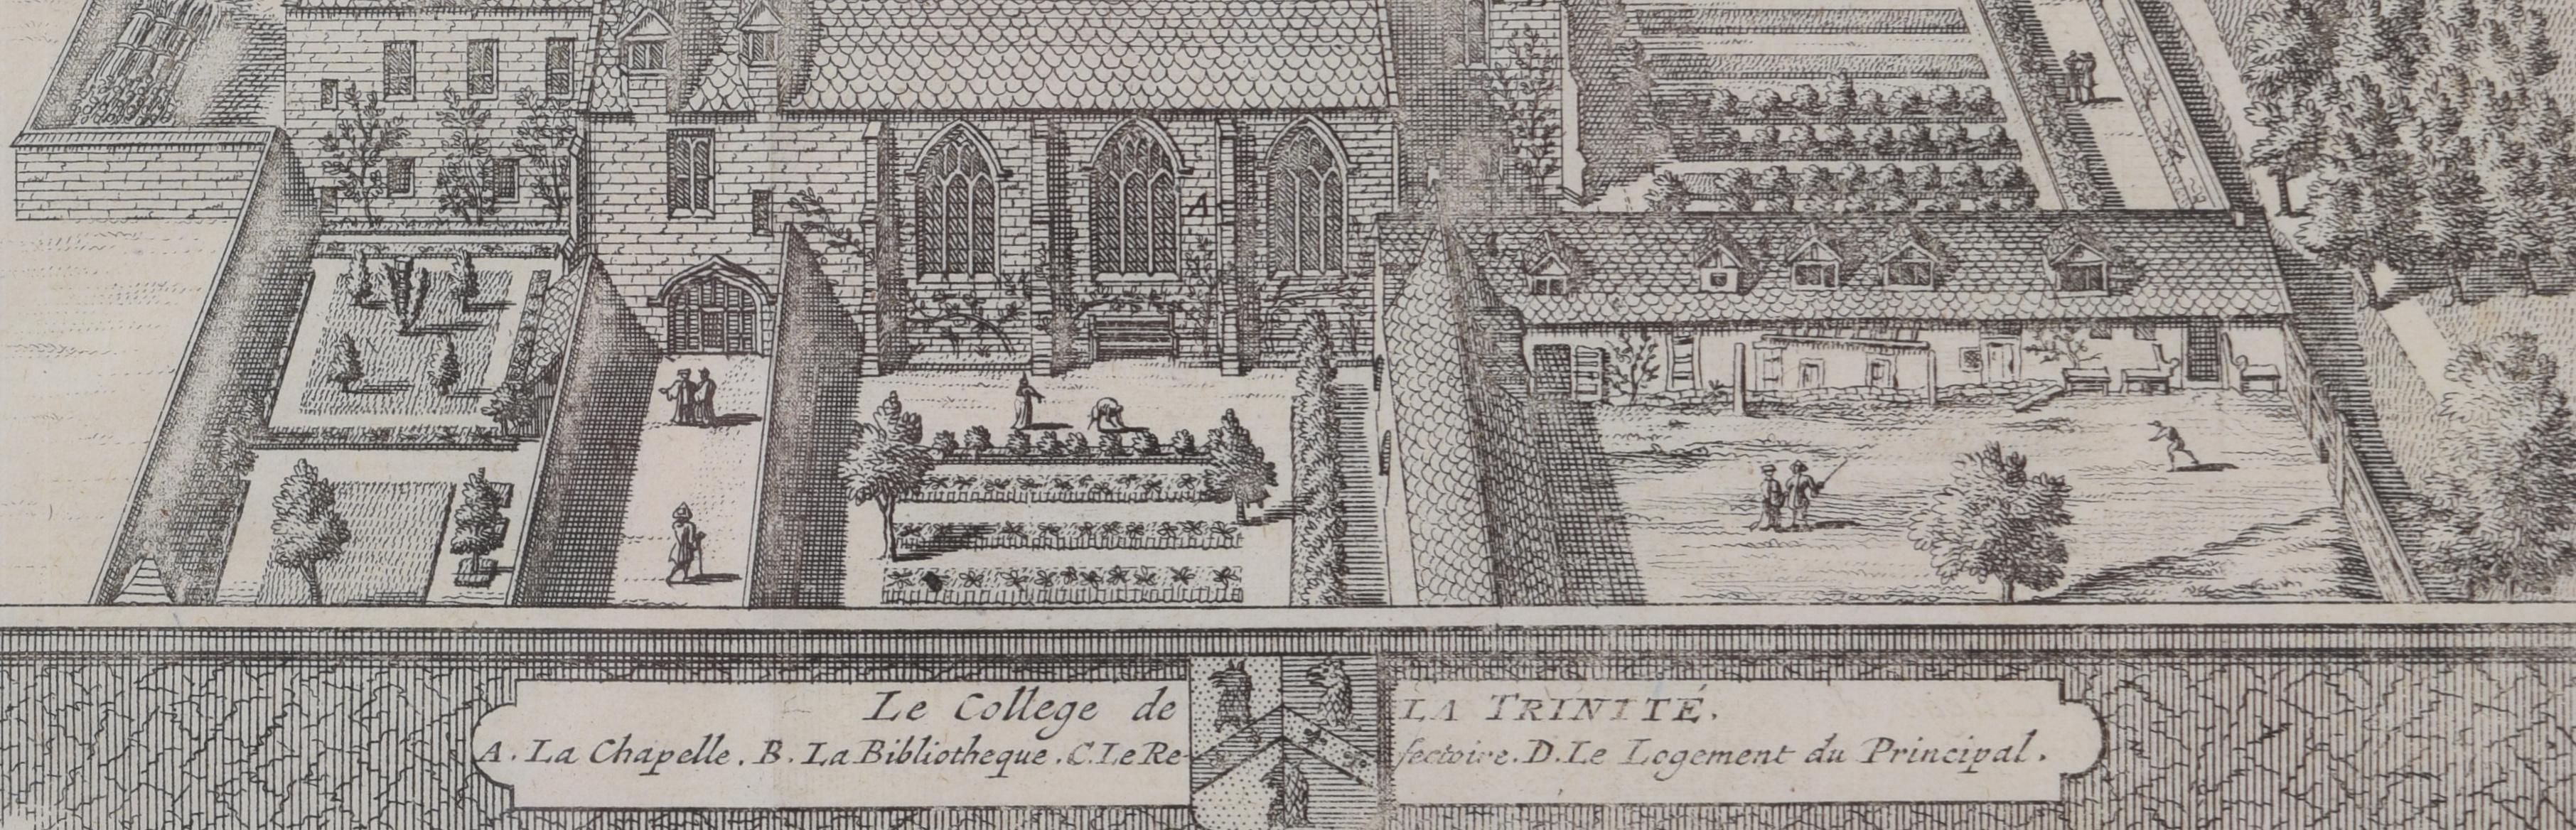 Pieter van der Aa (1659-1733), after David Loggan (1634–1692)
Trinity College, Oxford
Engraving
12 x 16 cm

An eighteenth-century view of Trinity College, engraved by Pieter van der Aa after David Loggan, the noted engraver, draughtsman, and painter